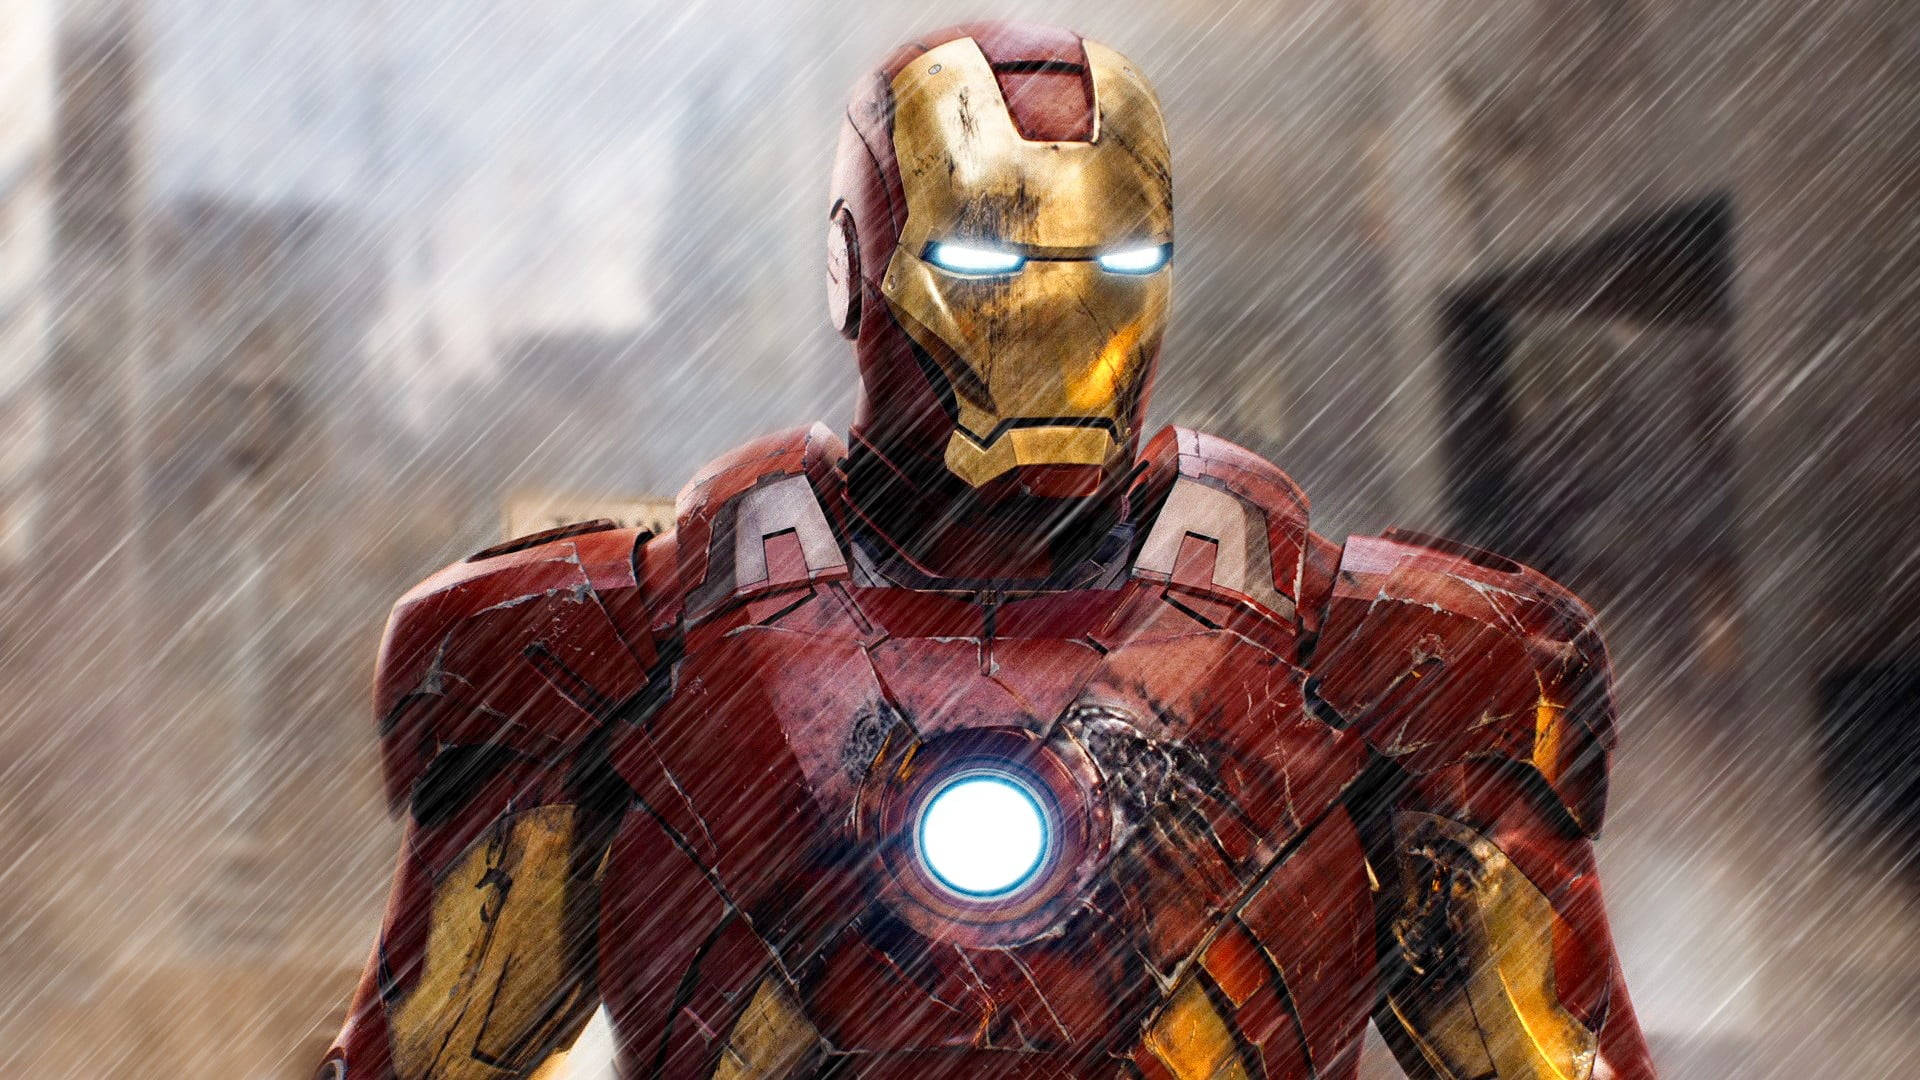 Marvel Avengers Iron Man Poster Background